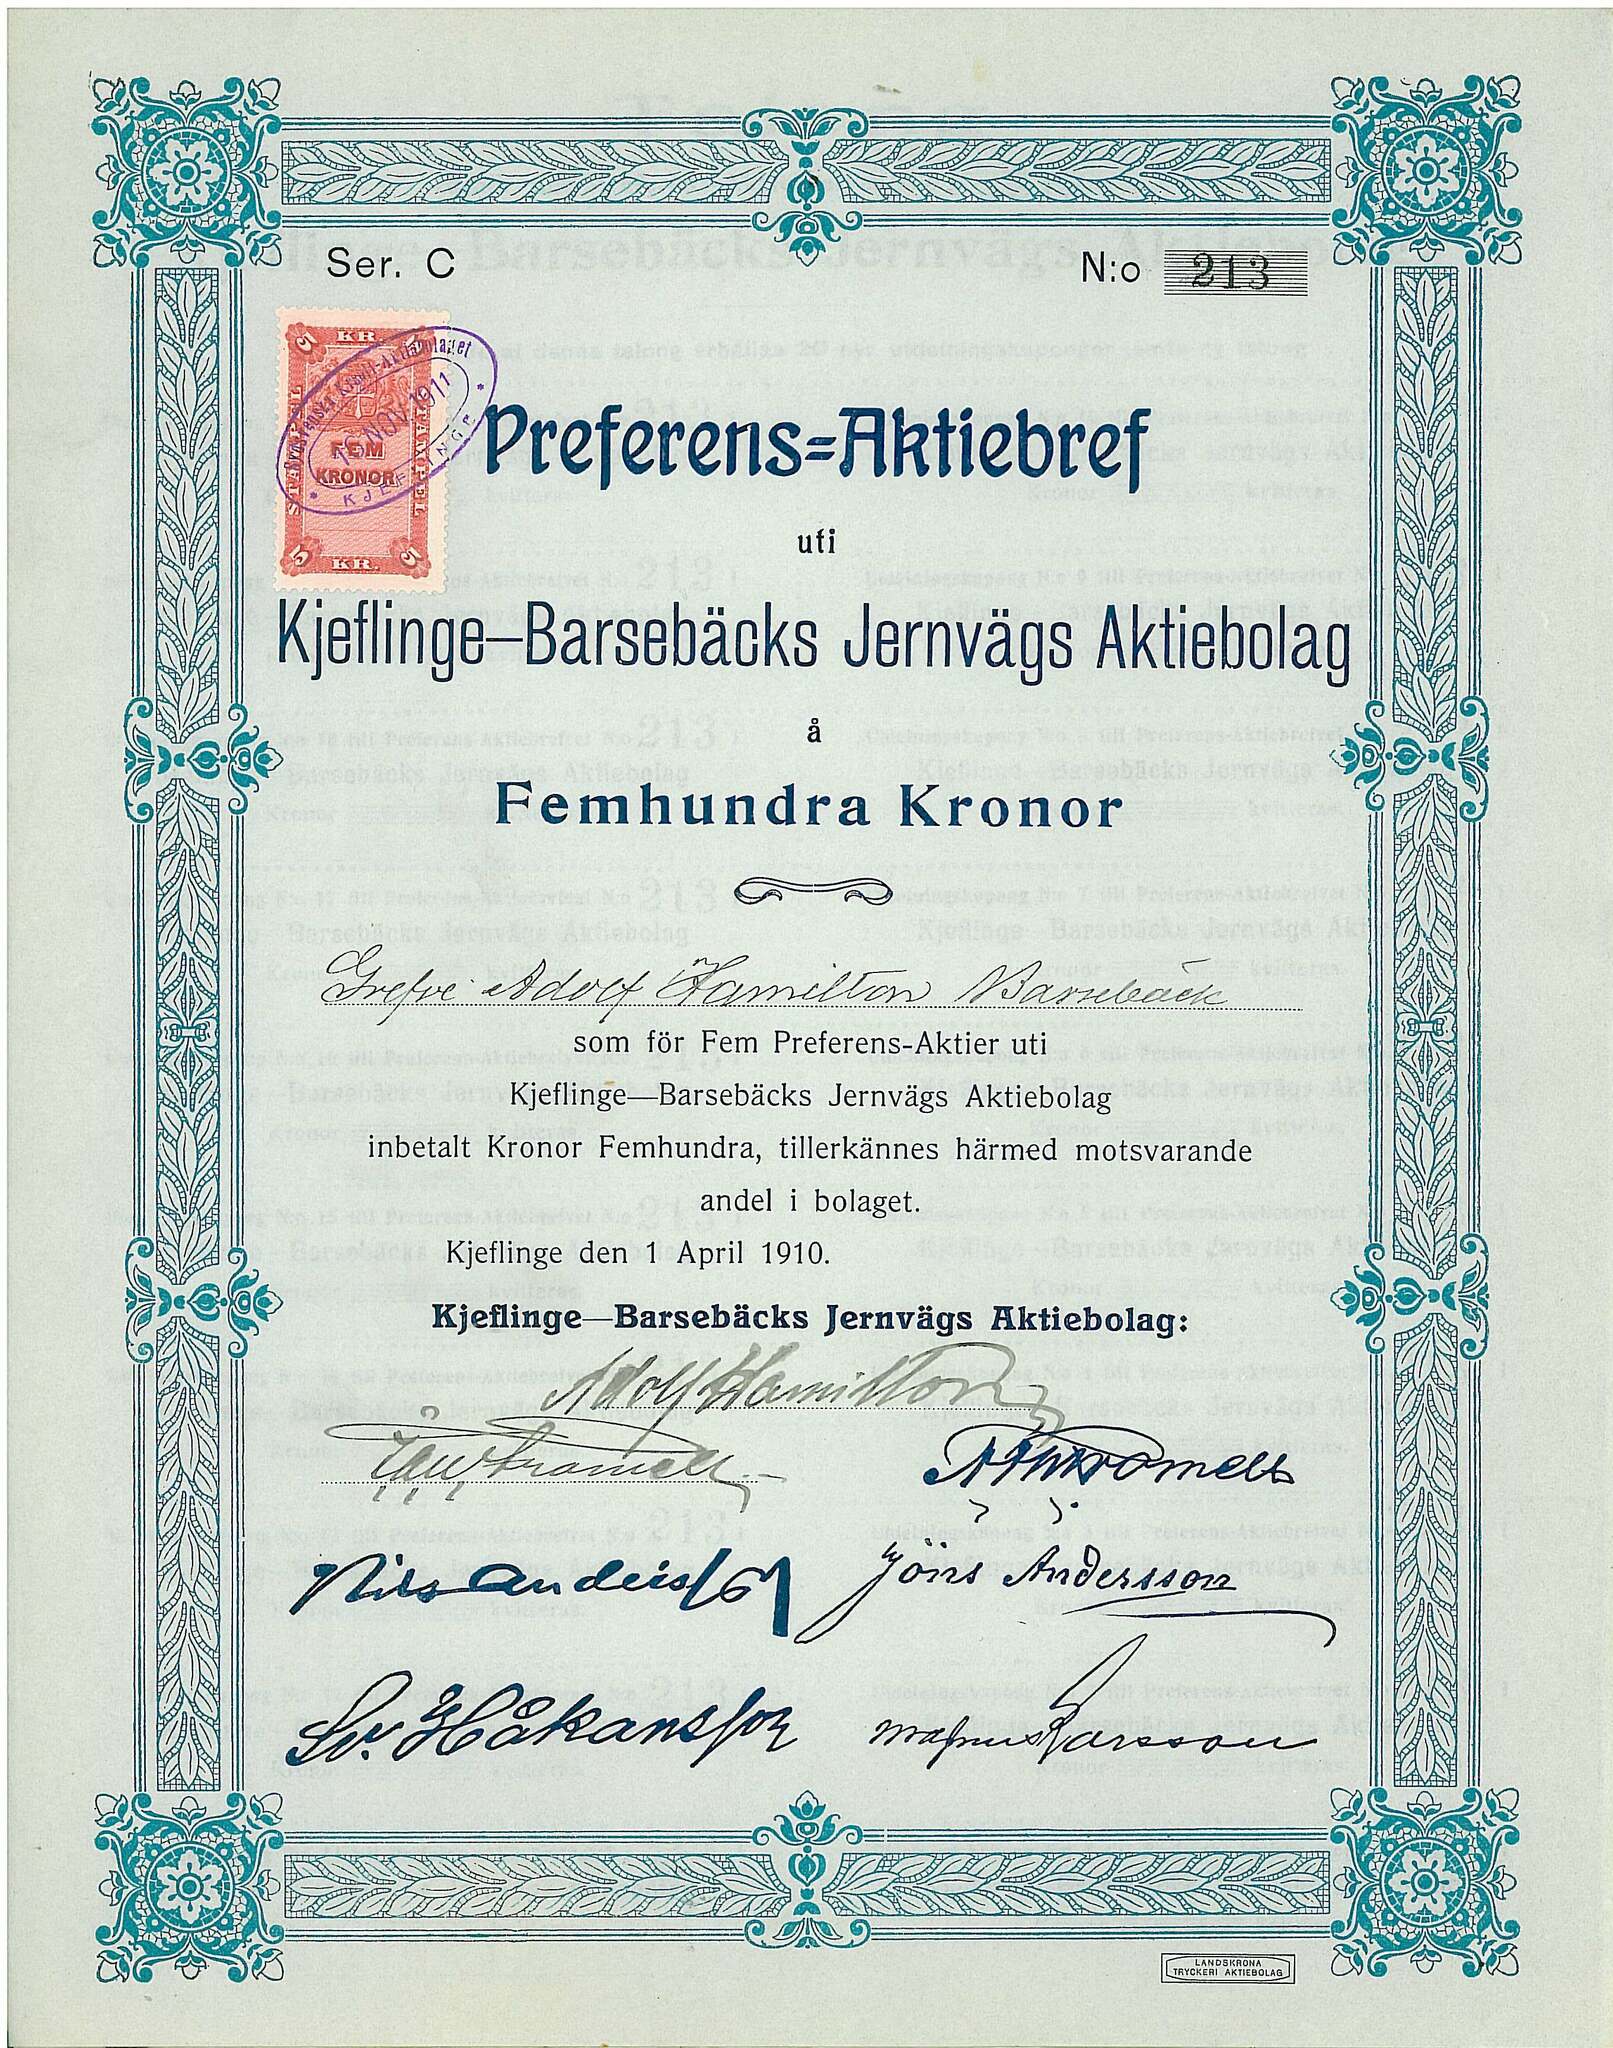 Kjeflinge-Barsebäcks Jernvägs AB, 500 kr, 1910,